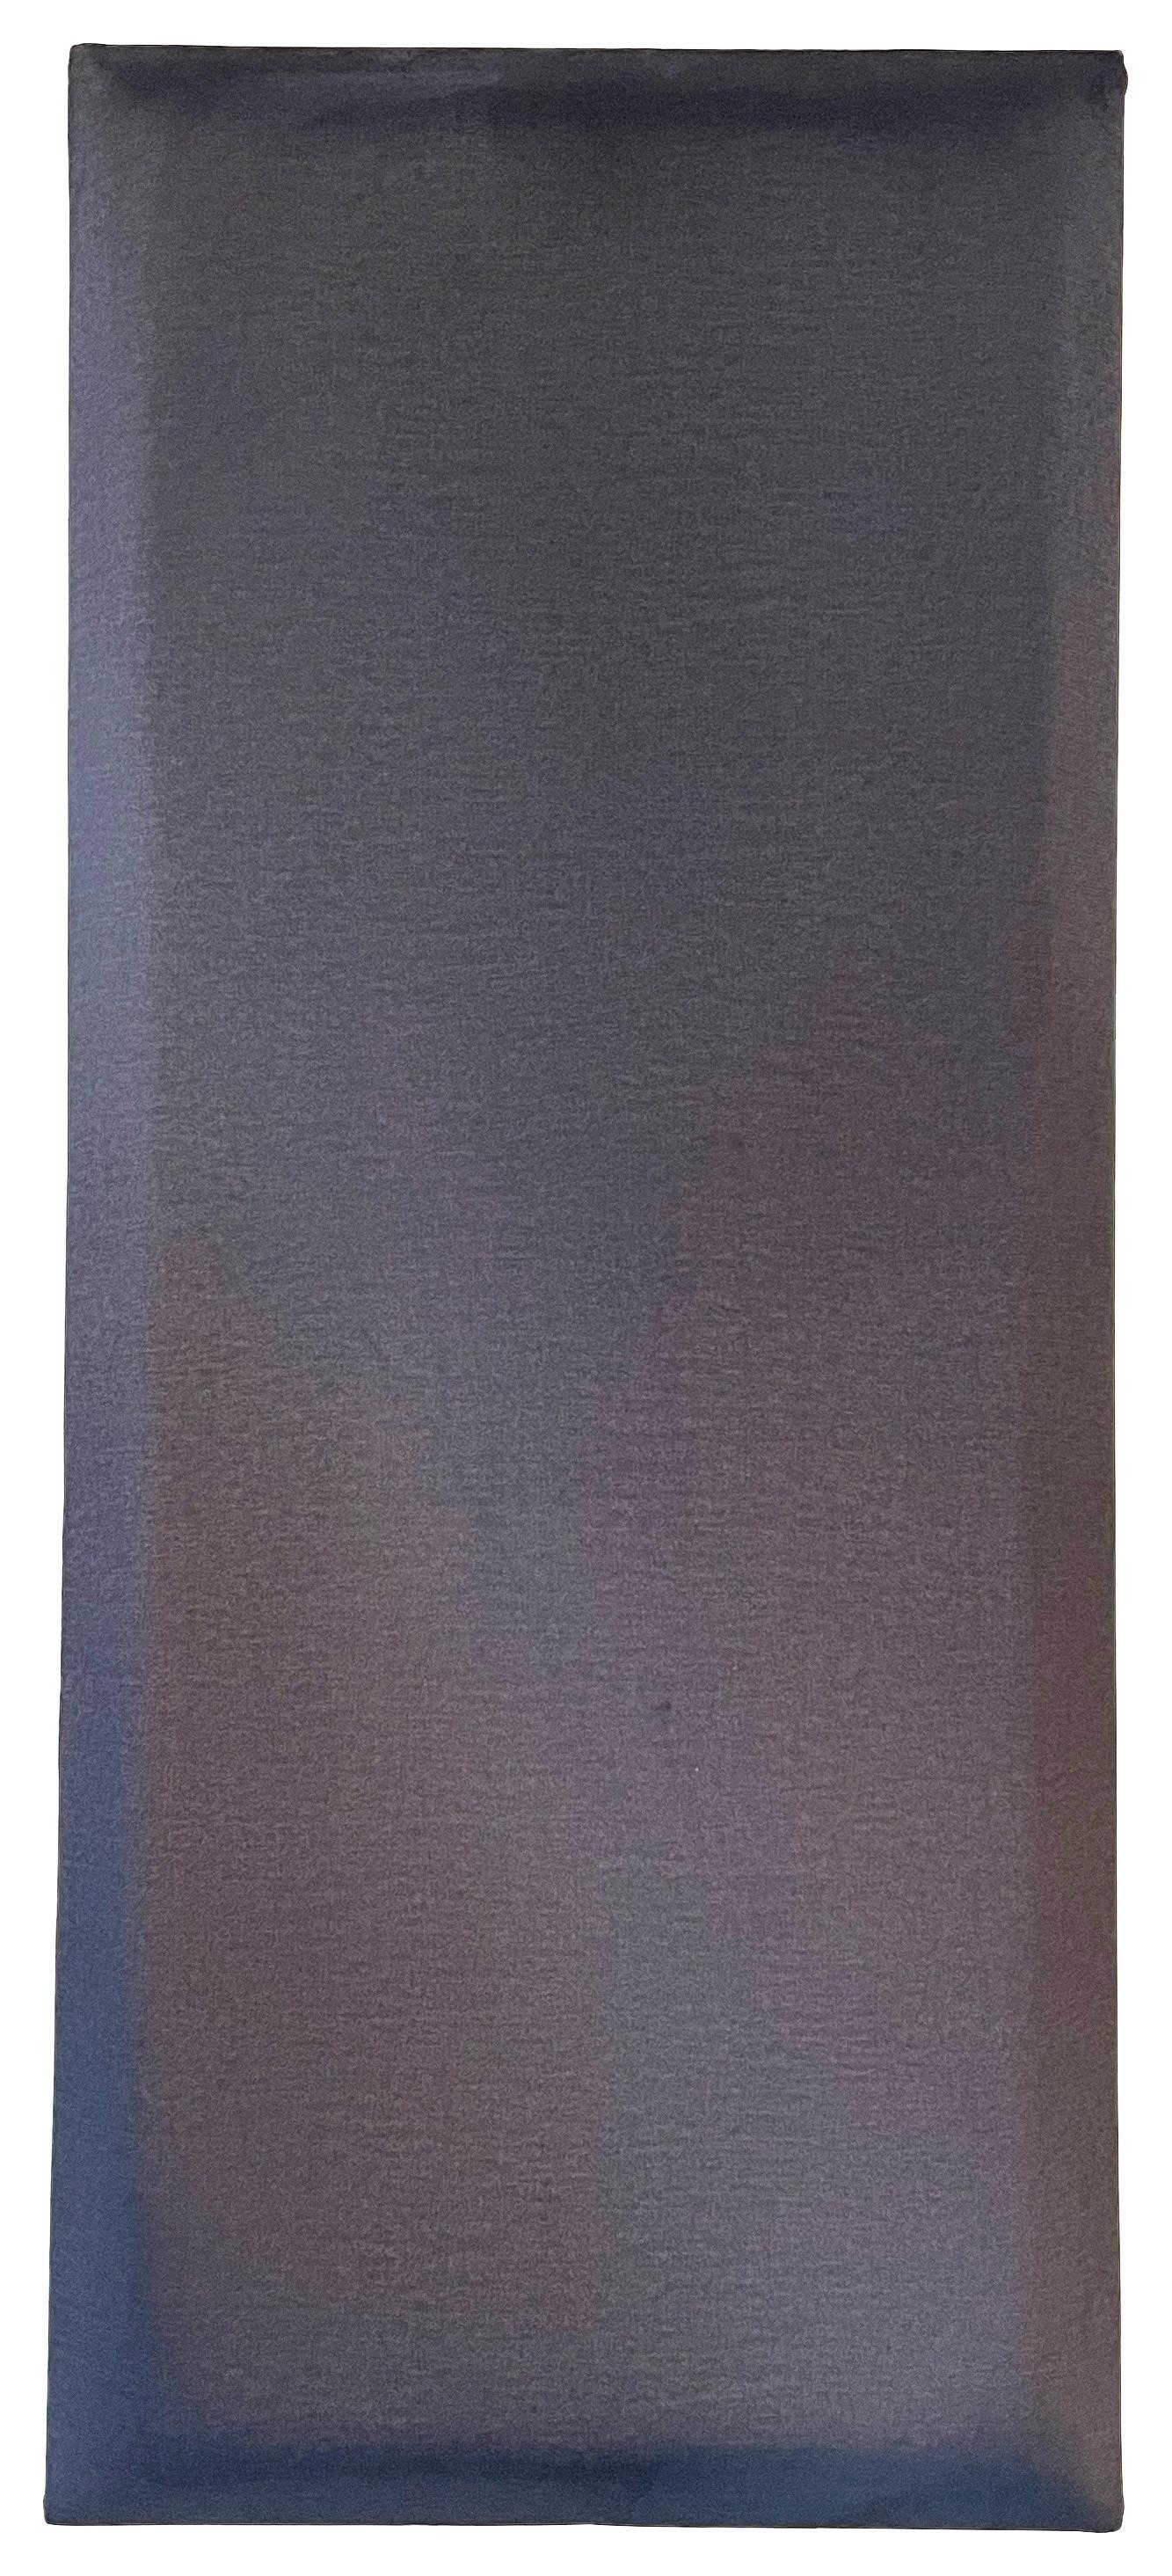 Wandpolster 2er-Set 70x30 cm Rechteckig, Anthrazit - Anthrazit, Basics, Textil (70/30/4cm) - MID.YOU